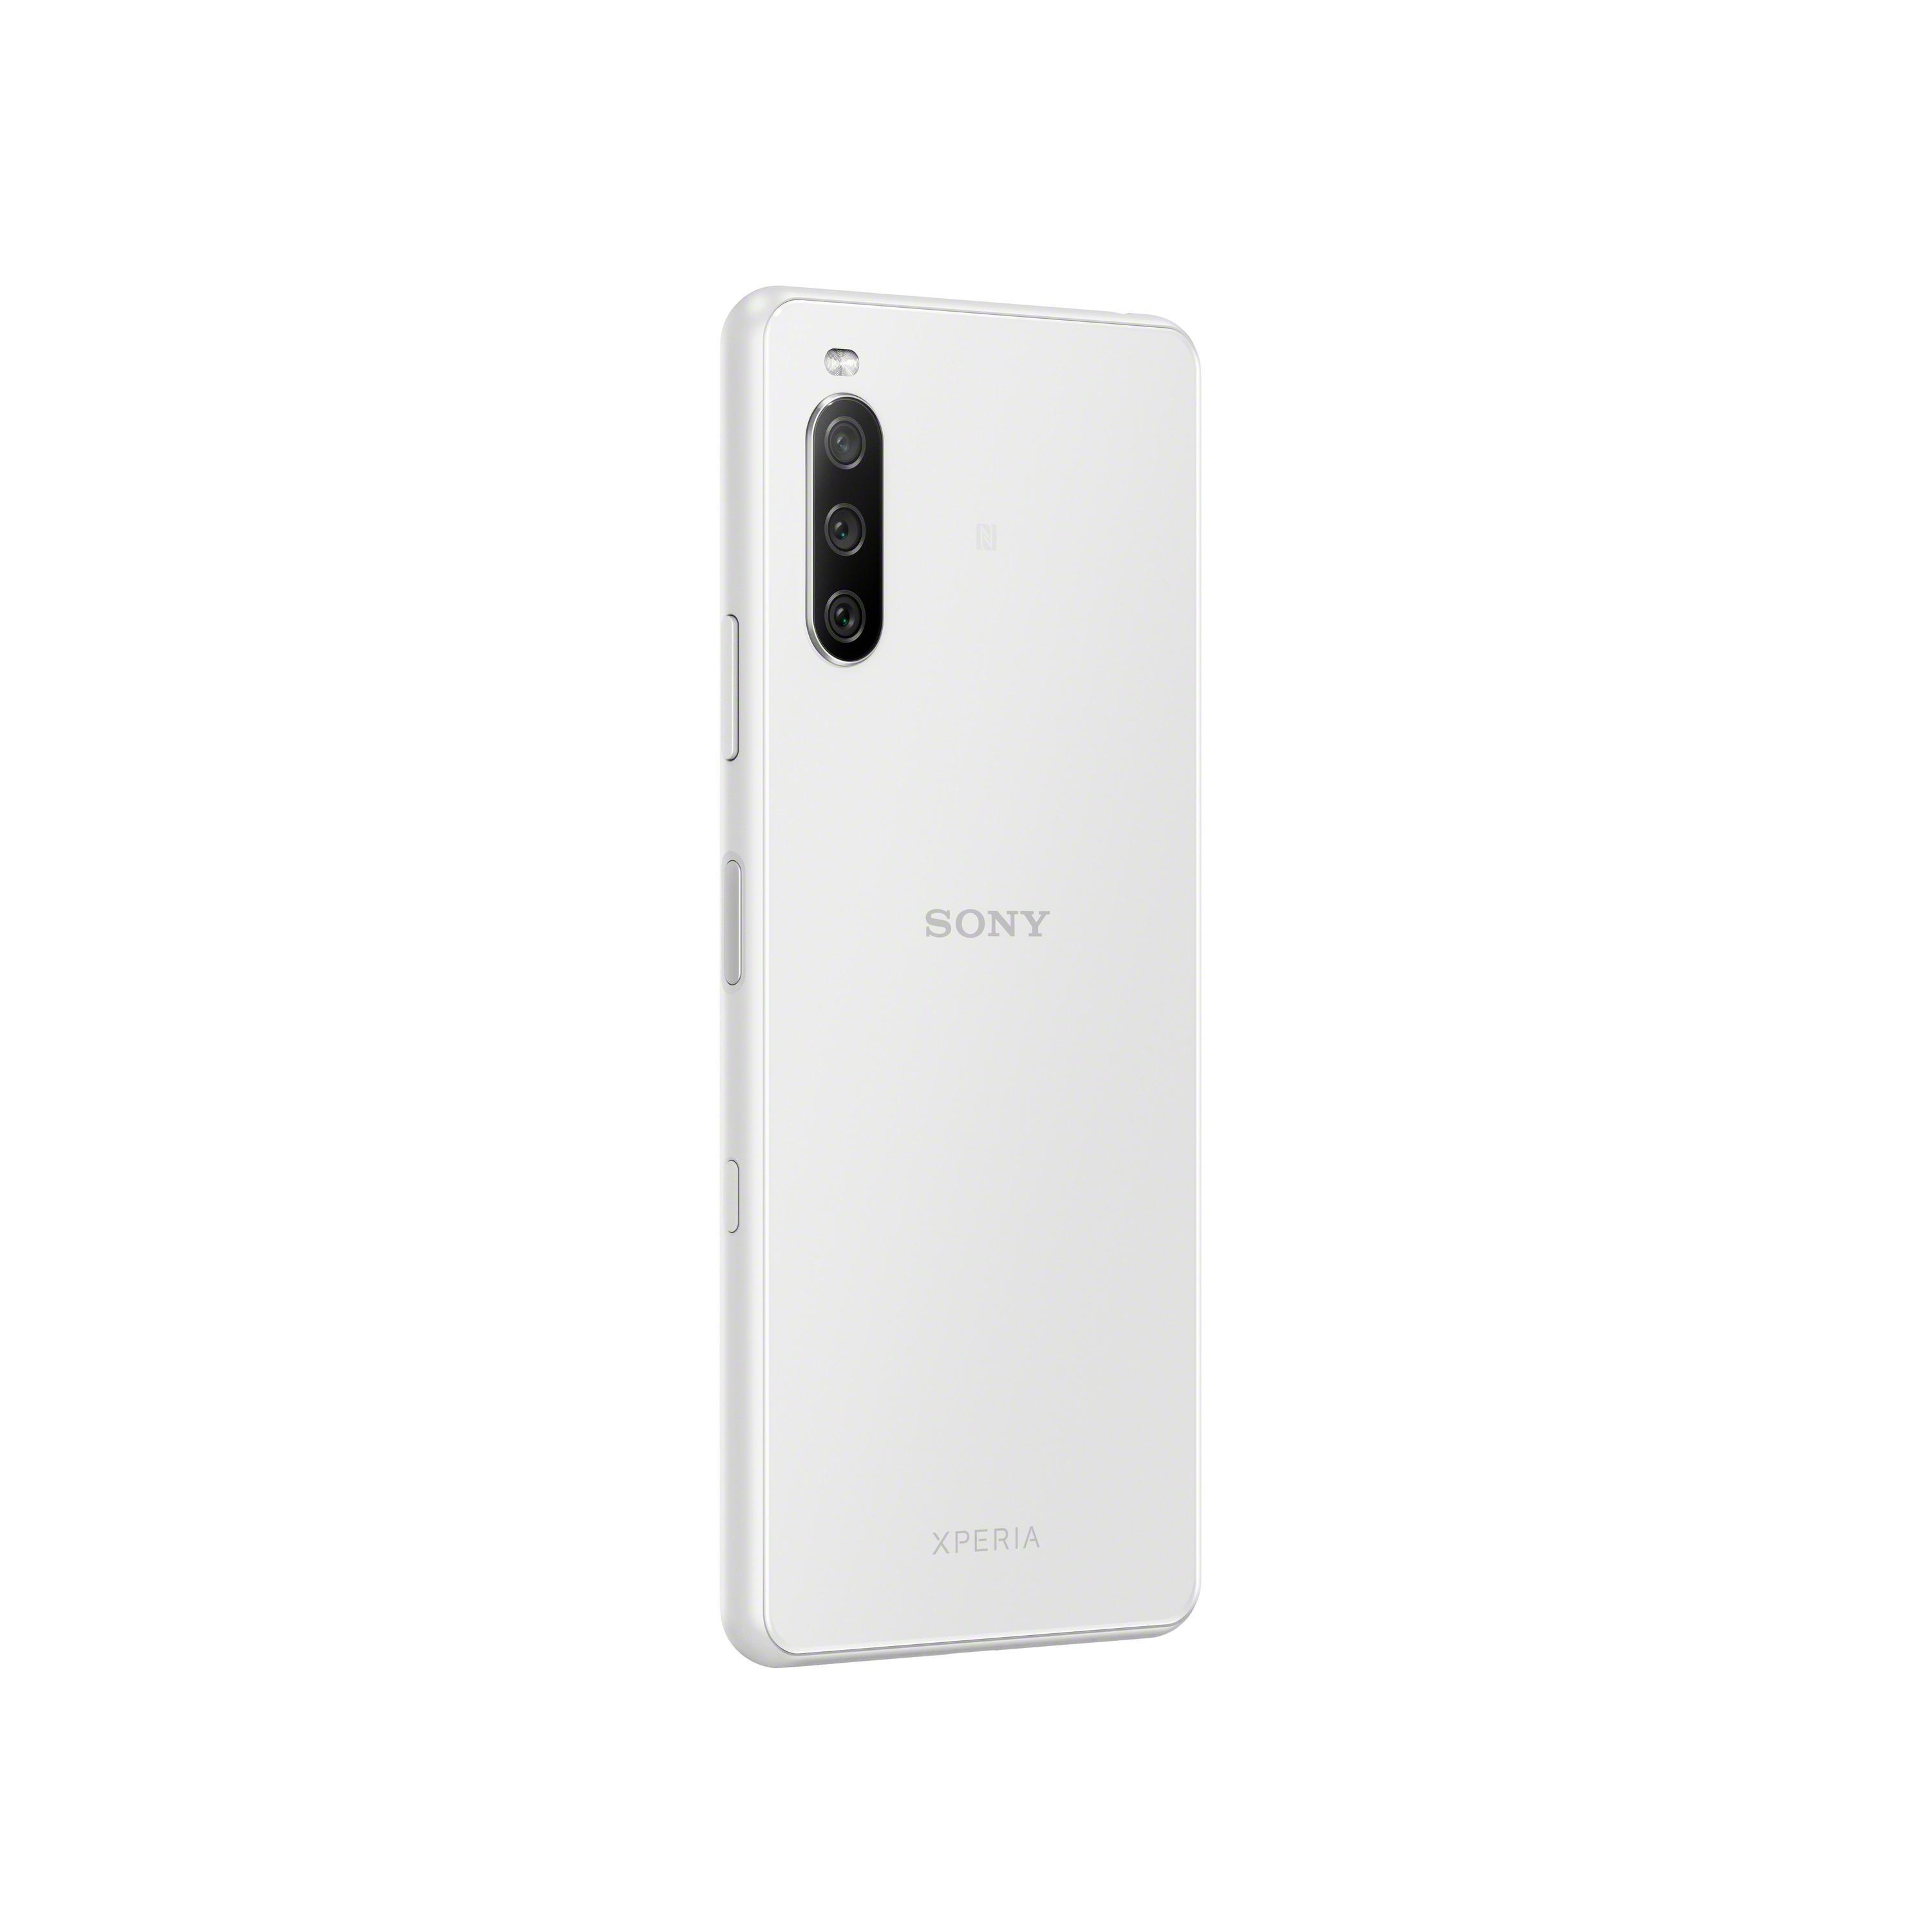 5G SIM 10 128 III SONY Weiß 21:9 GB Display Dual Xperia